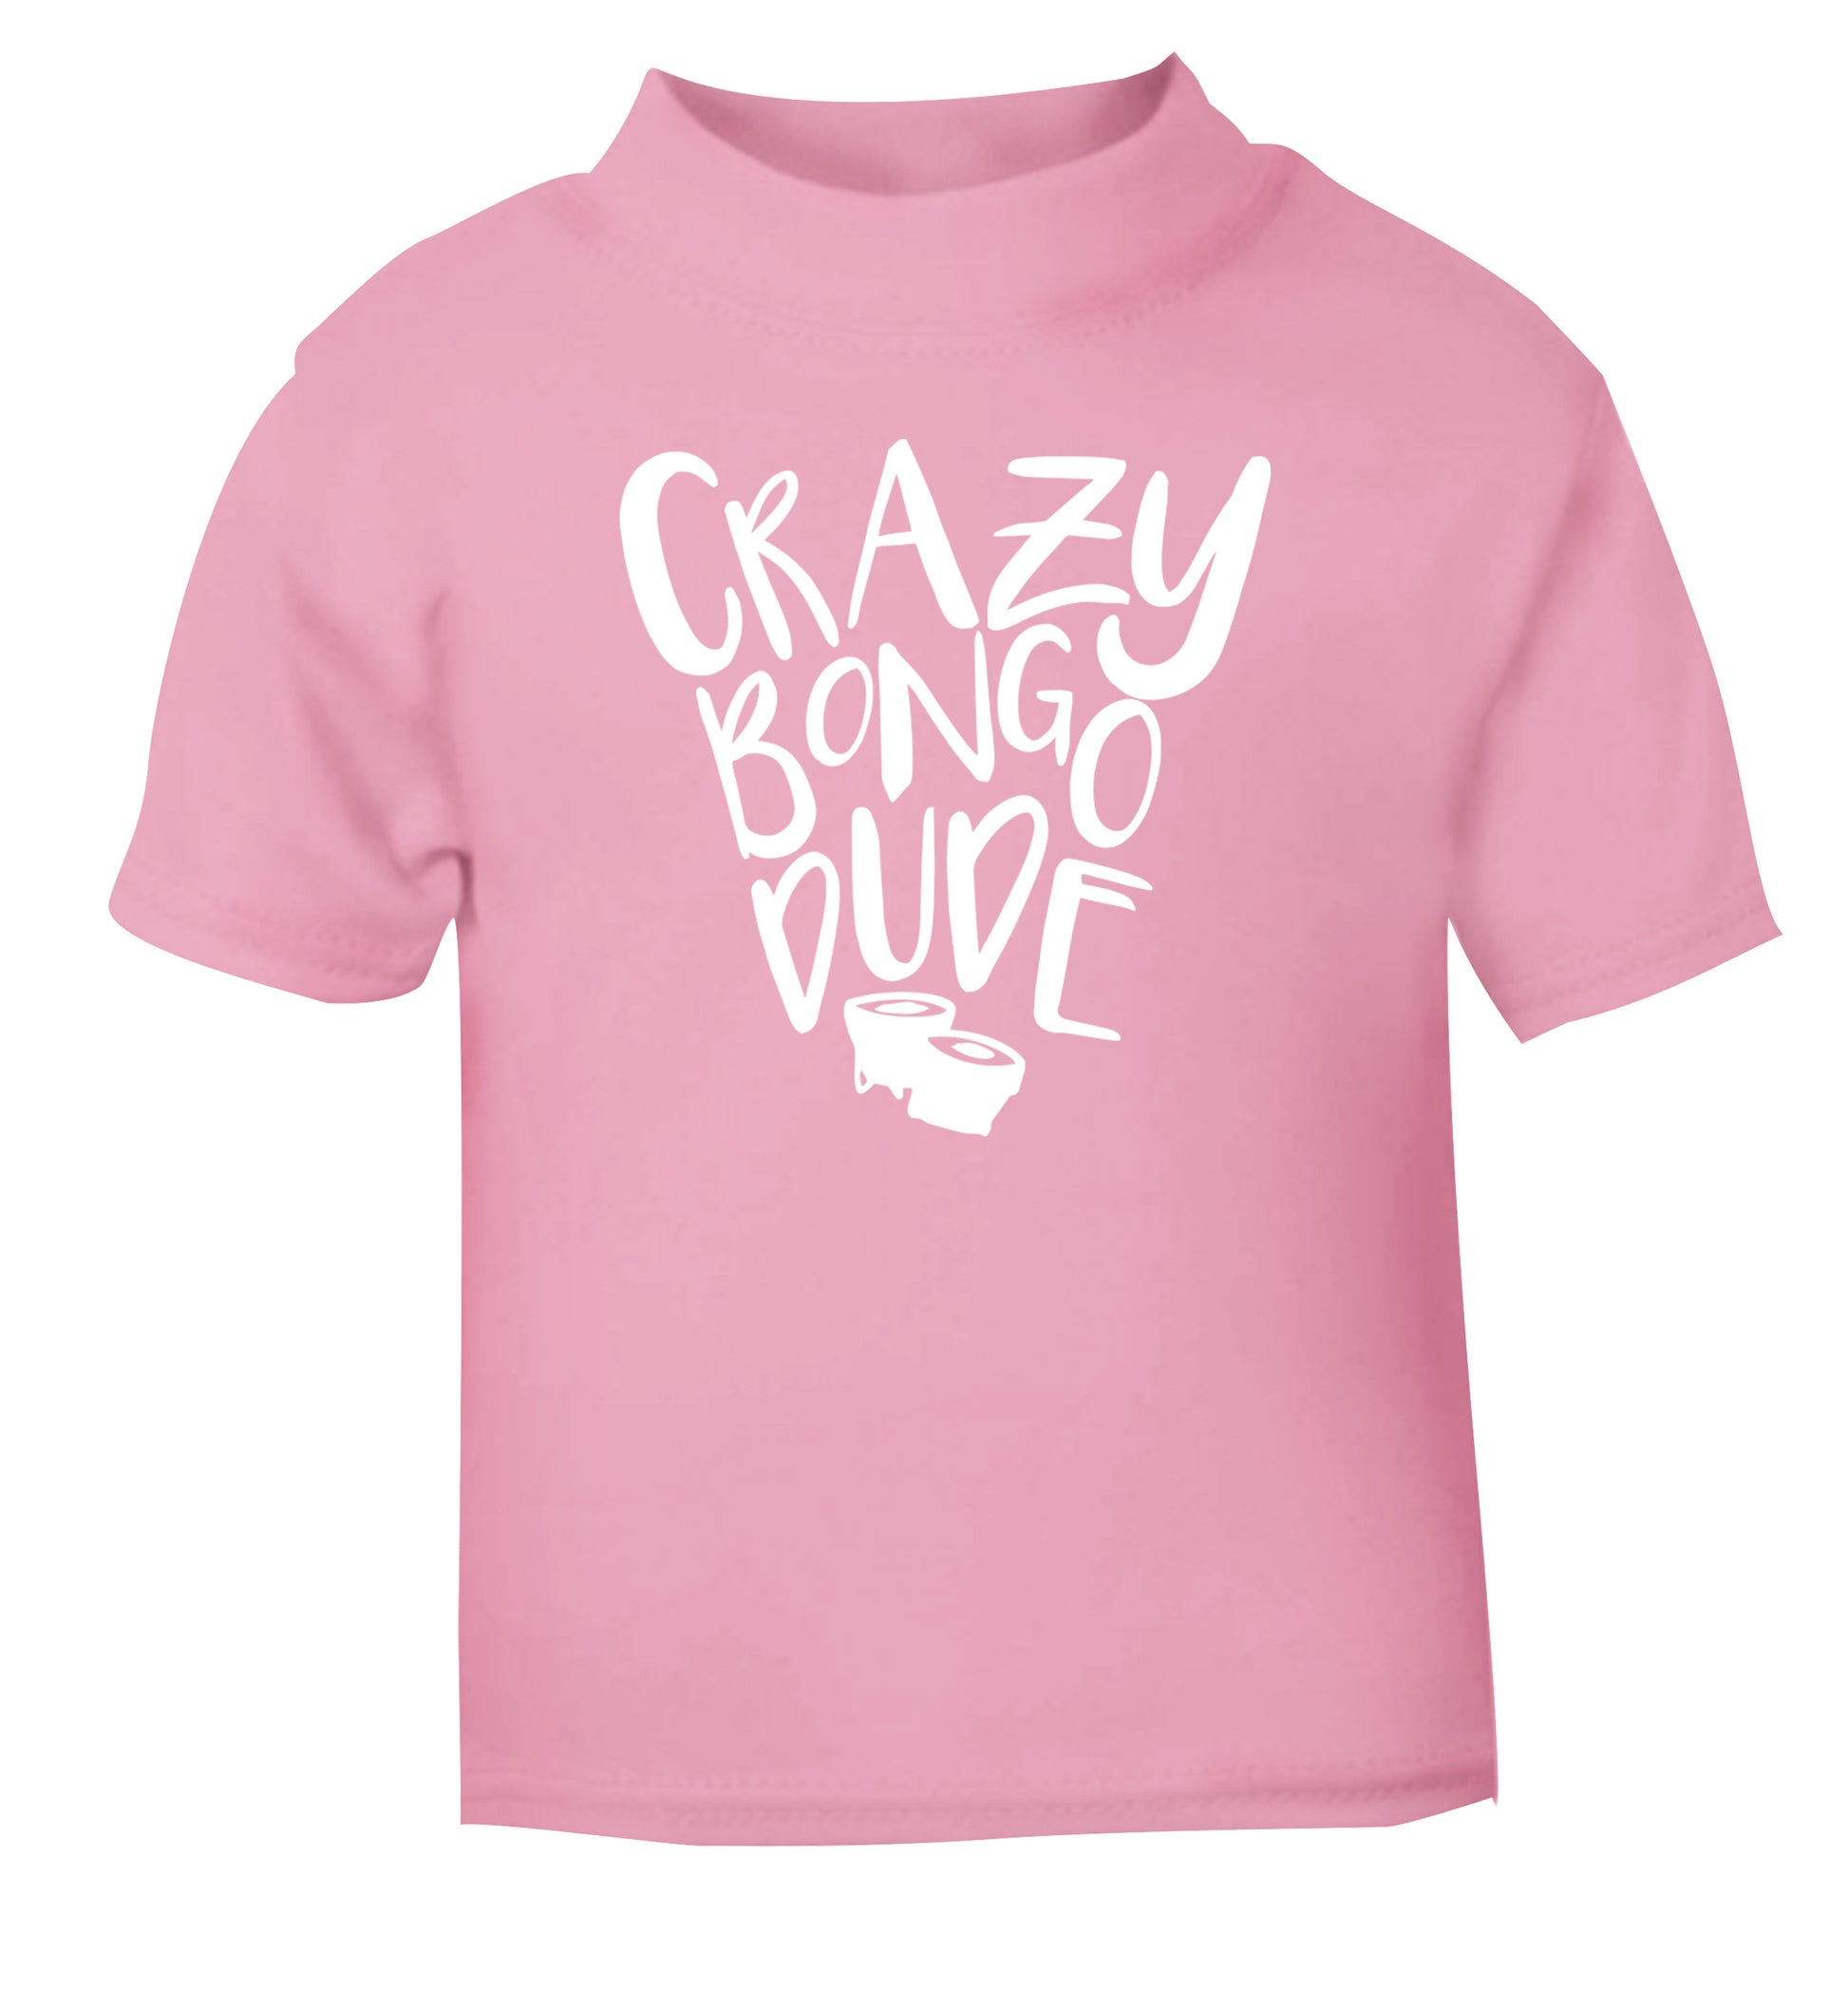 Crazy bongo dude light pink Baby Toddler Tshirt 2 Years